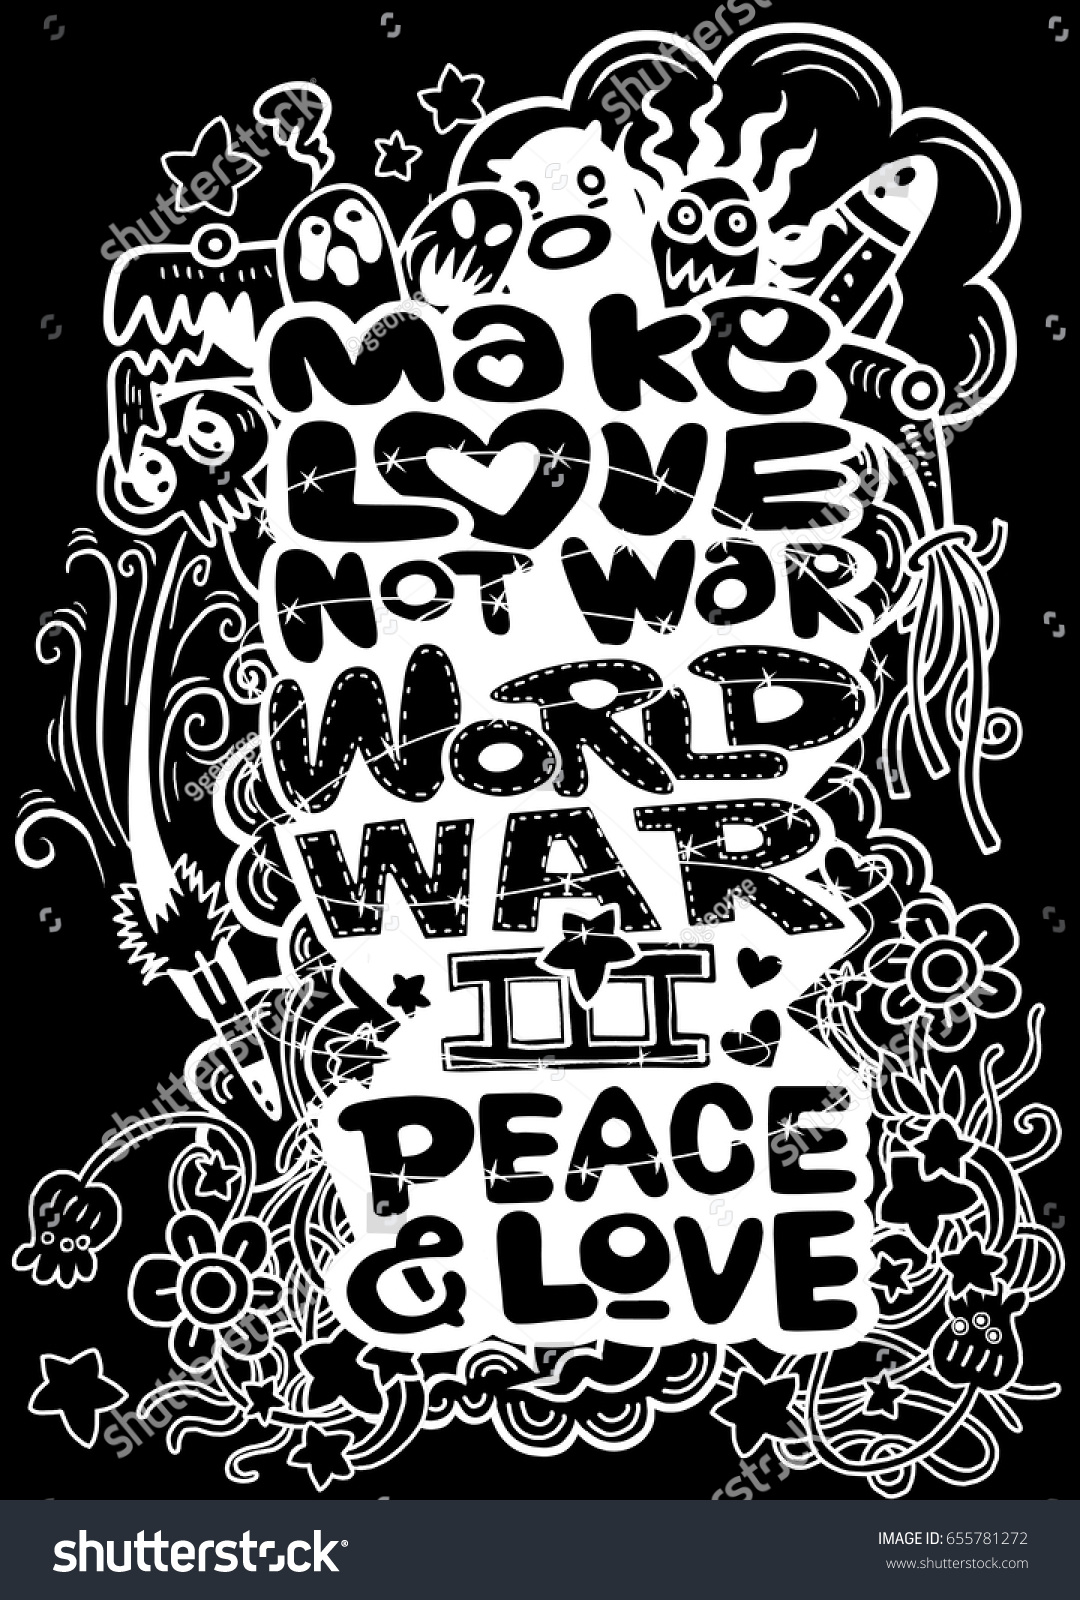 Vector illustration of doodle make love not war Inspirational quote Hand drawn vintage